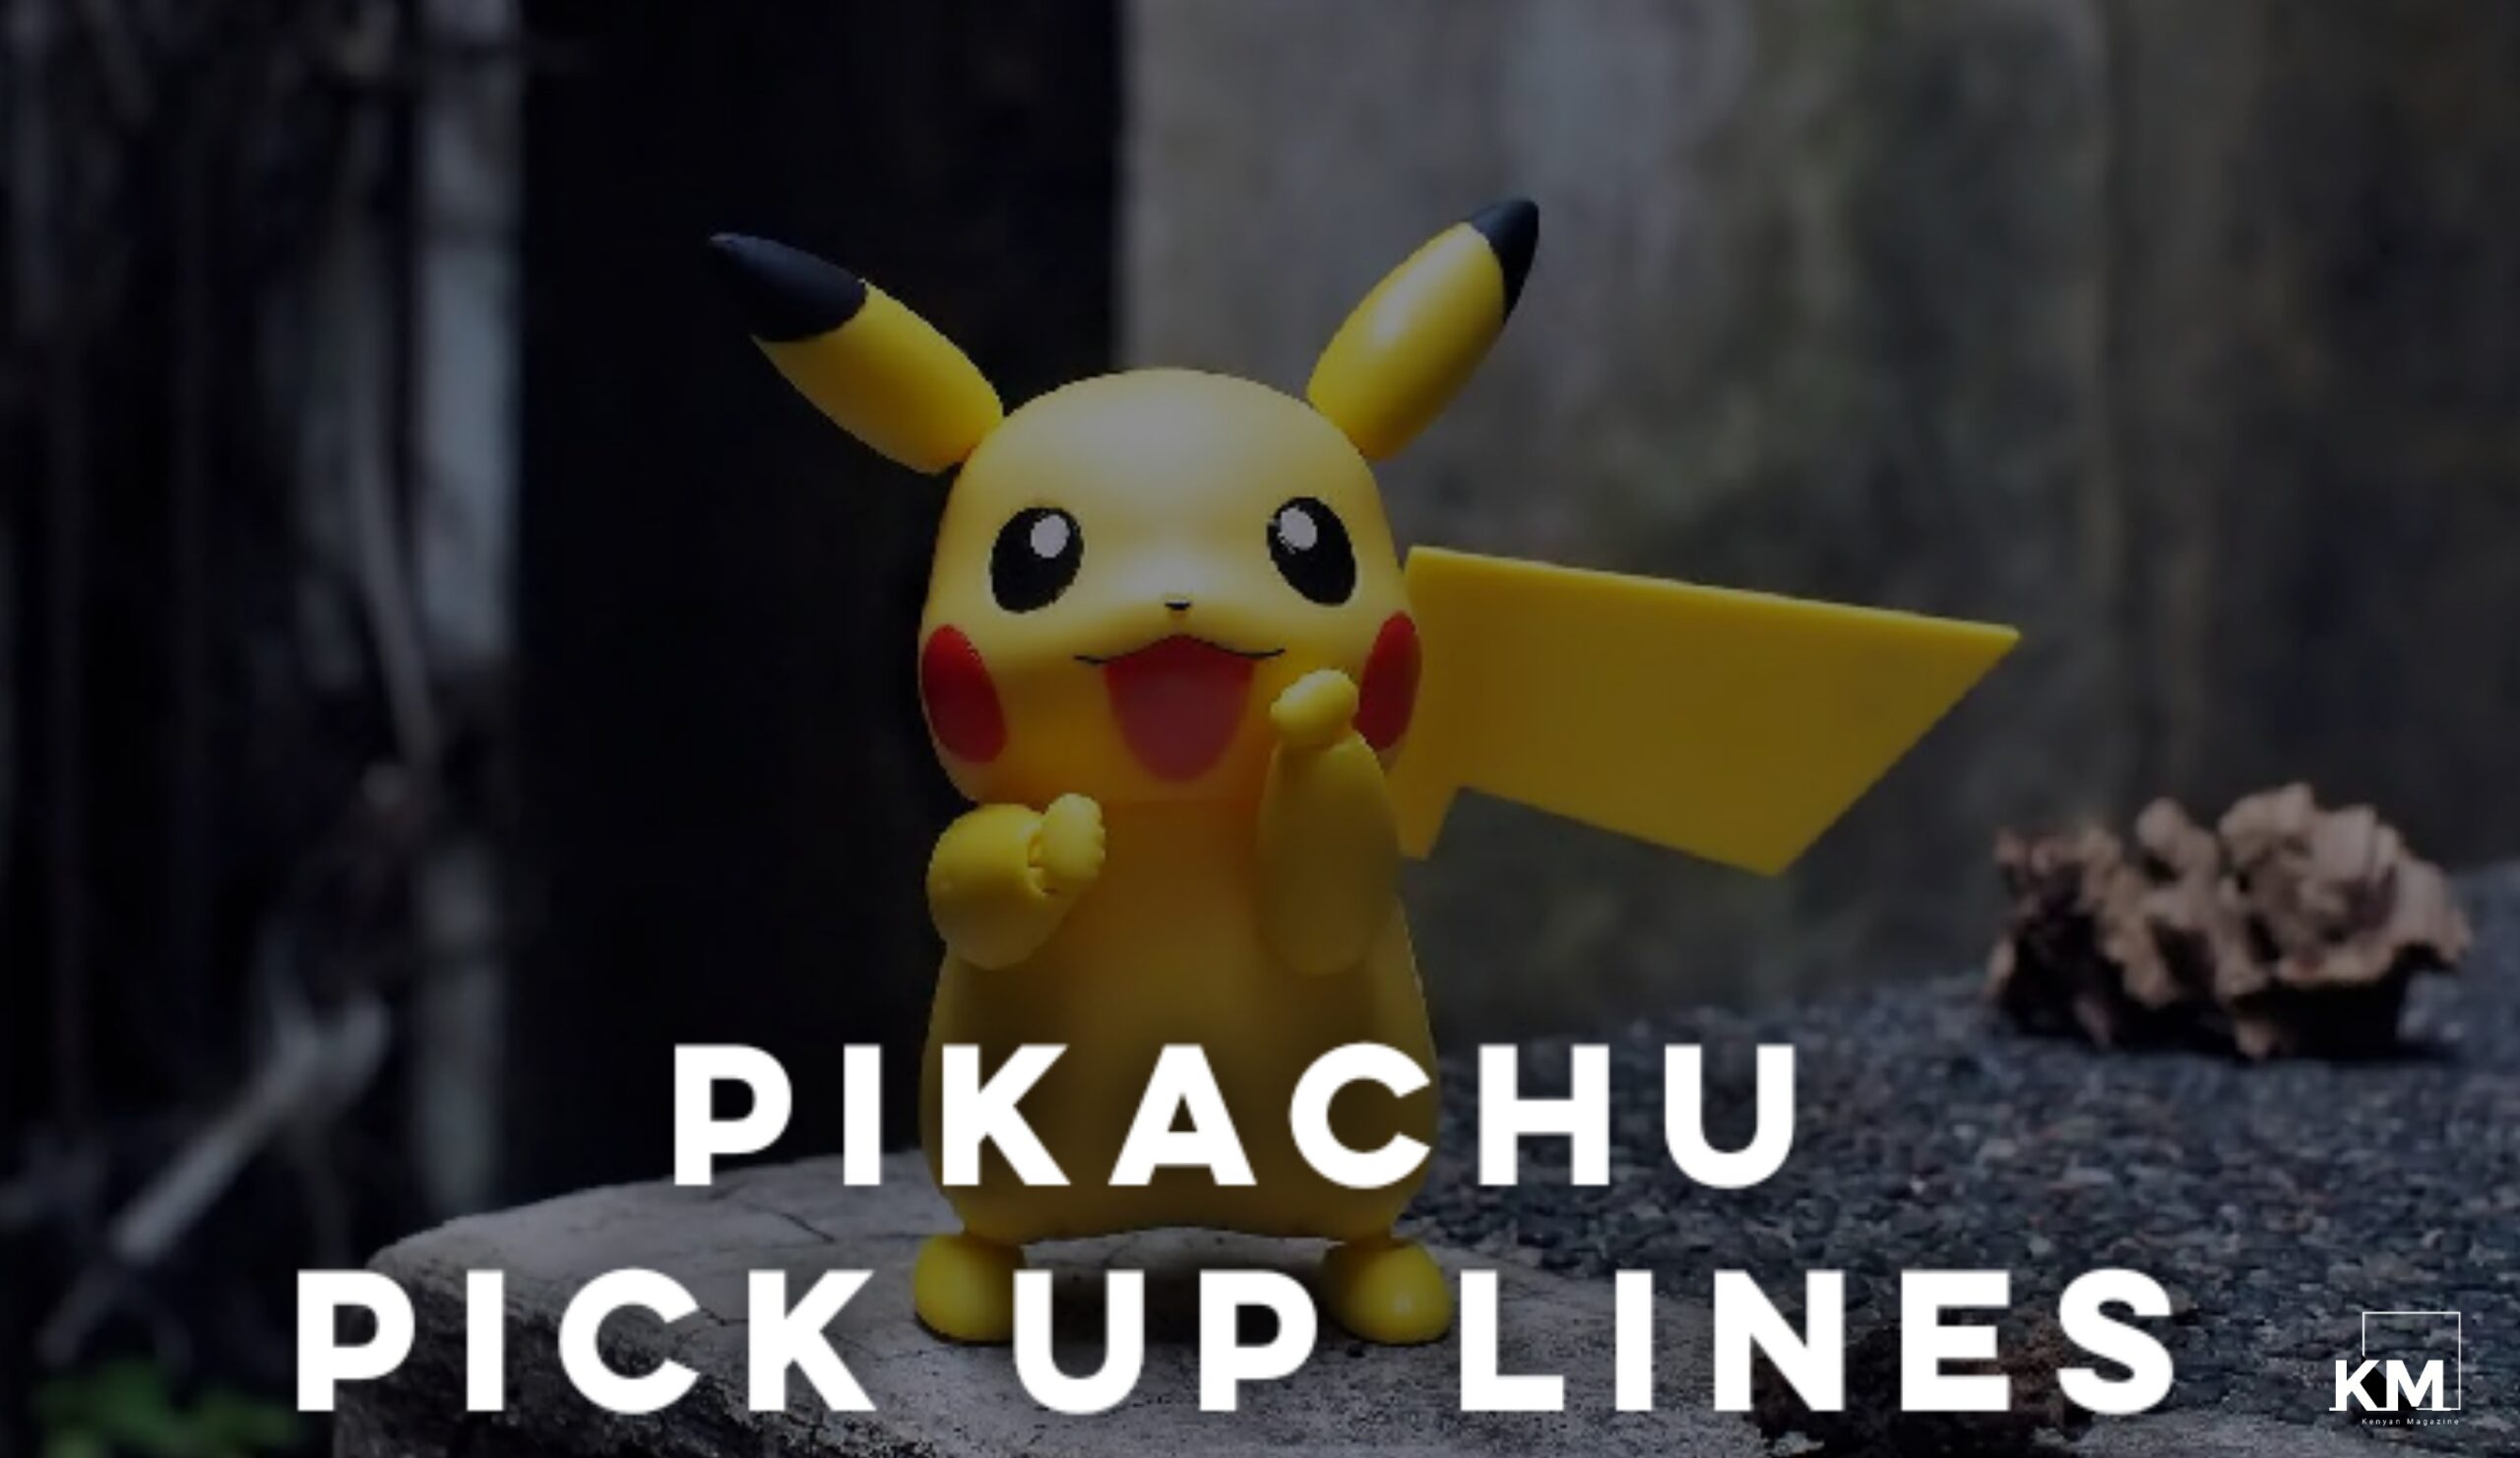 Pikachu Pick up lines